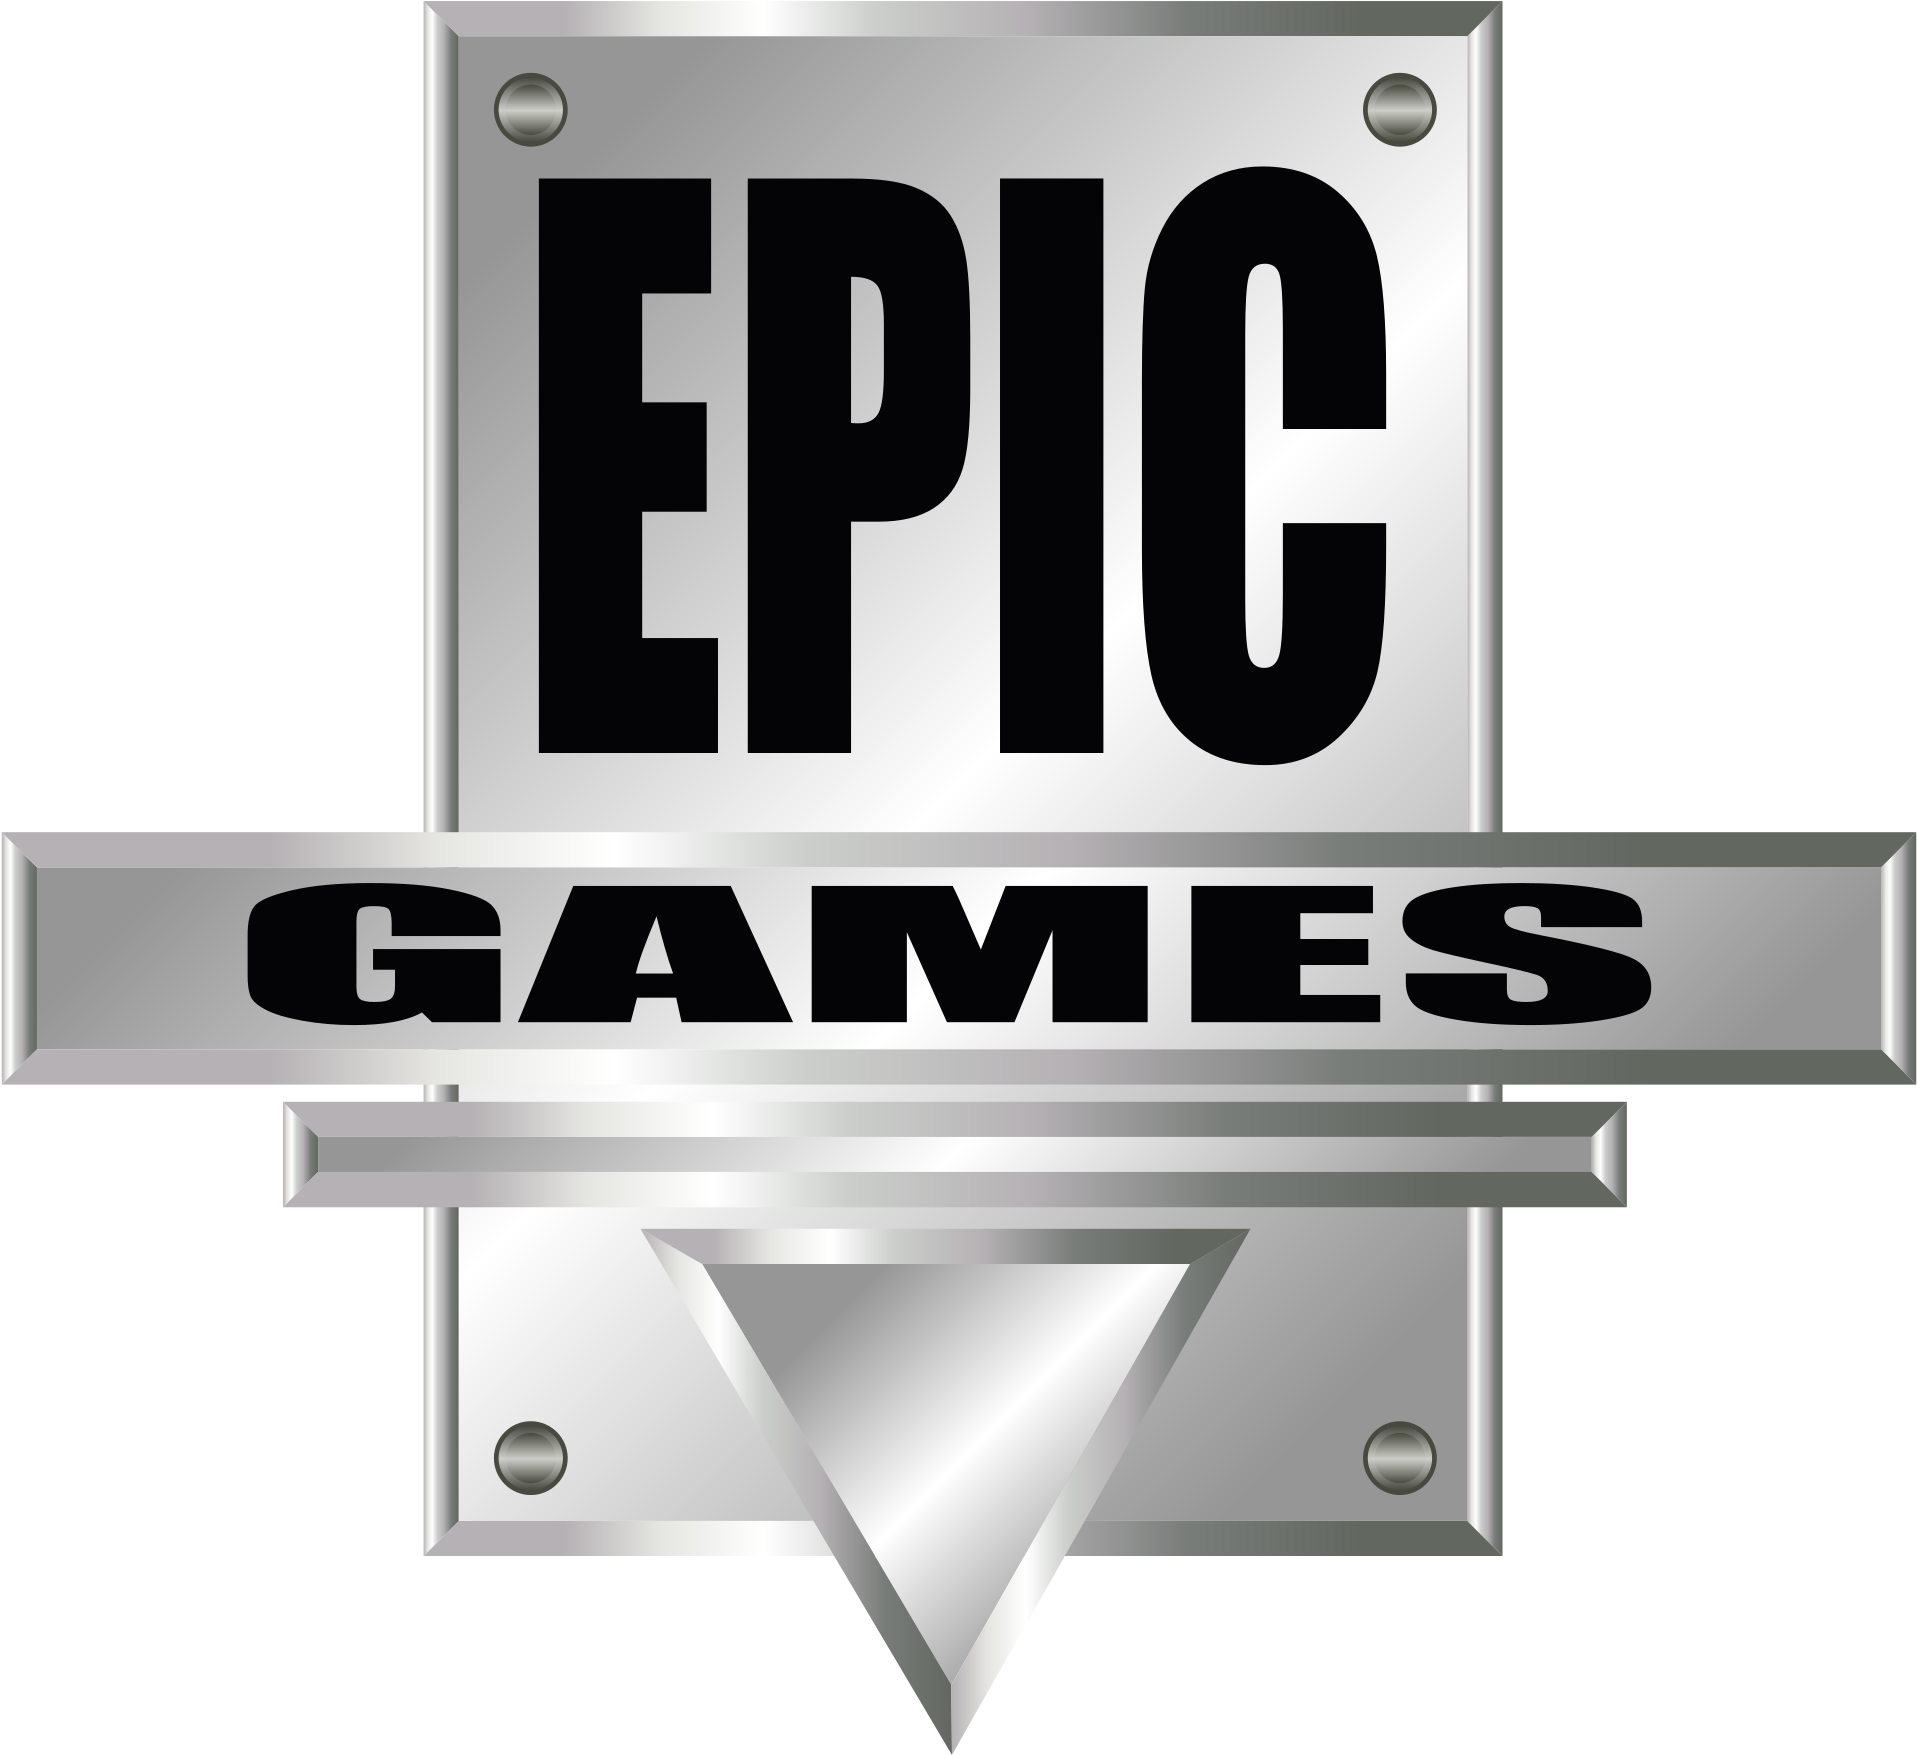 Epic Games Logo PNG File